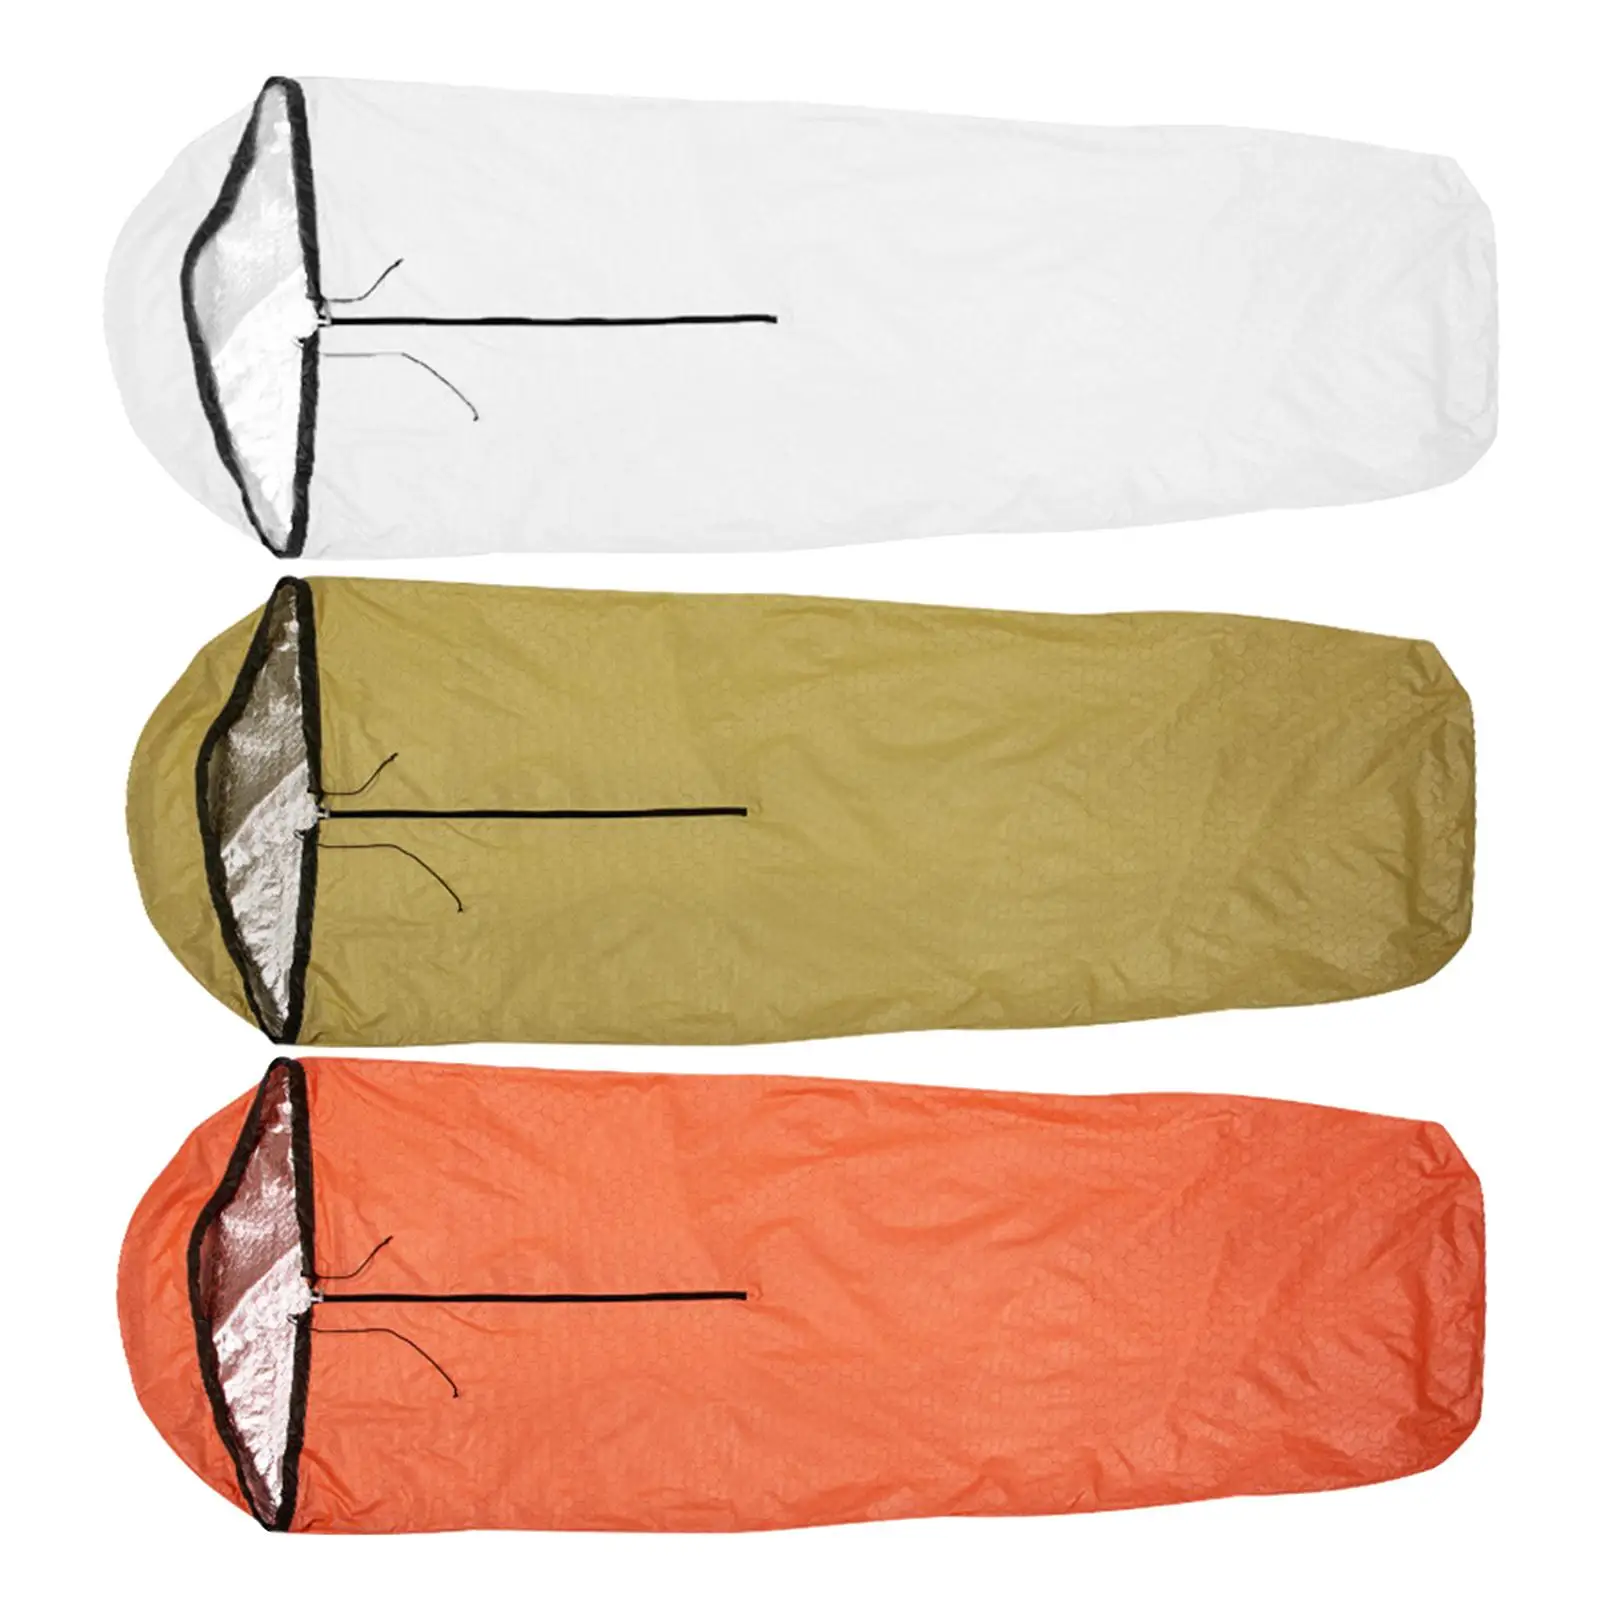 Emergency Sleeping Bag Reusable Multi Purpose Lightweight Survival Bag for Outdoor Survival Hiking Hurricanes Sleeping Adults